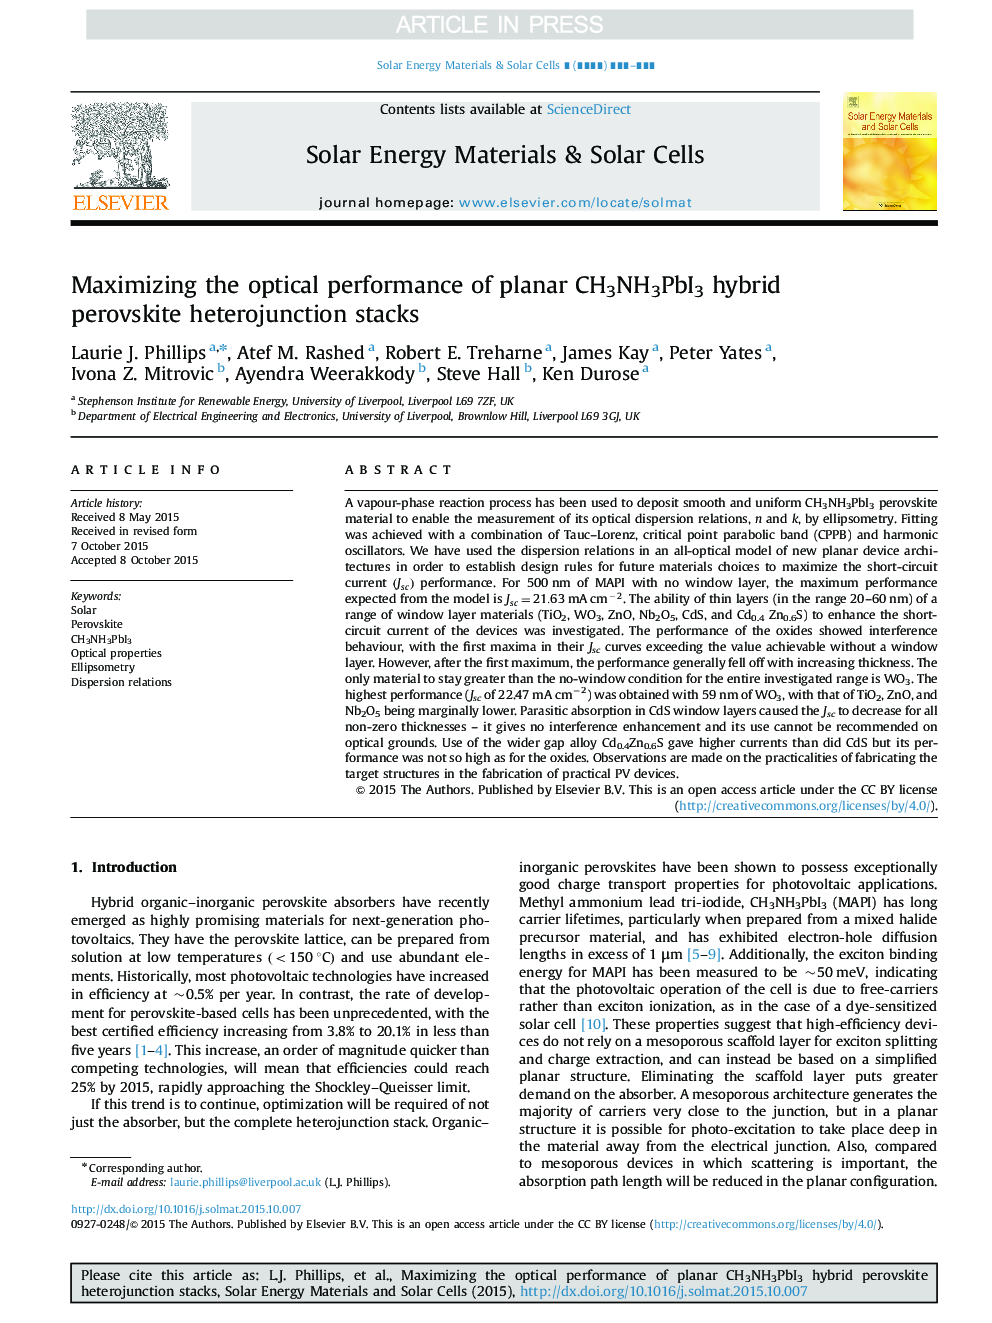 Maximizing the optical performance of planar CH3NH3PbI3 hybrid perovskite heterojunction stacks